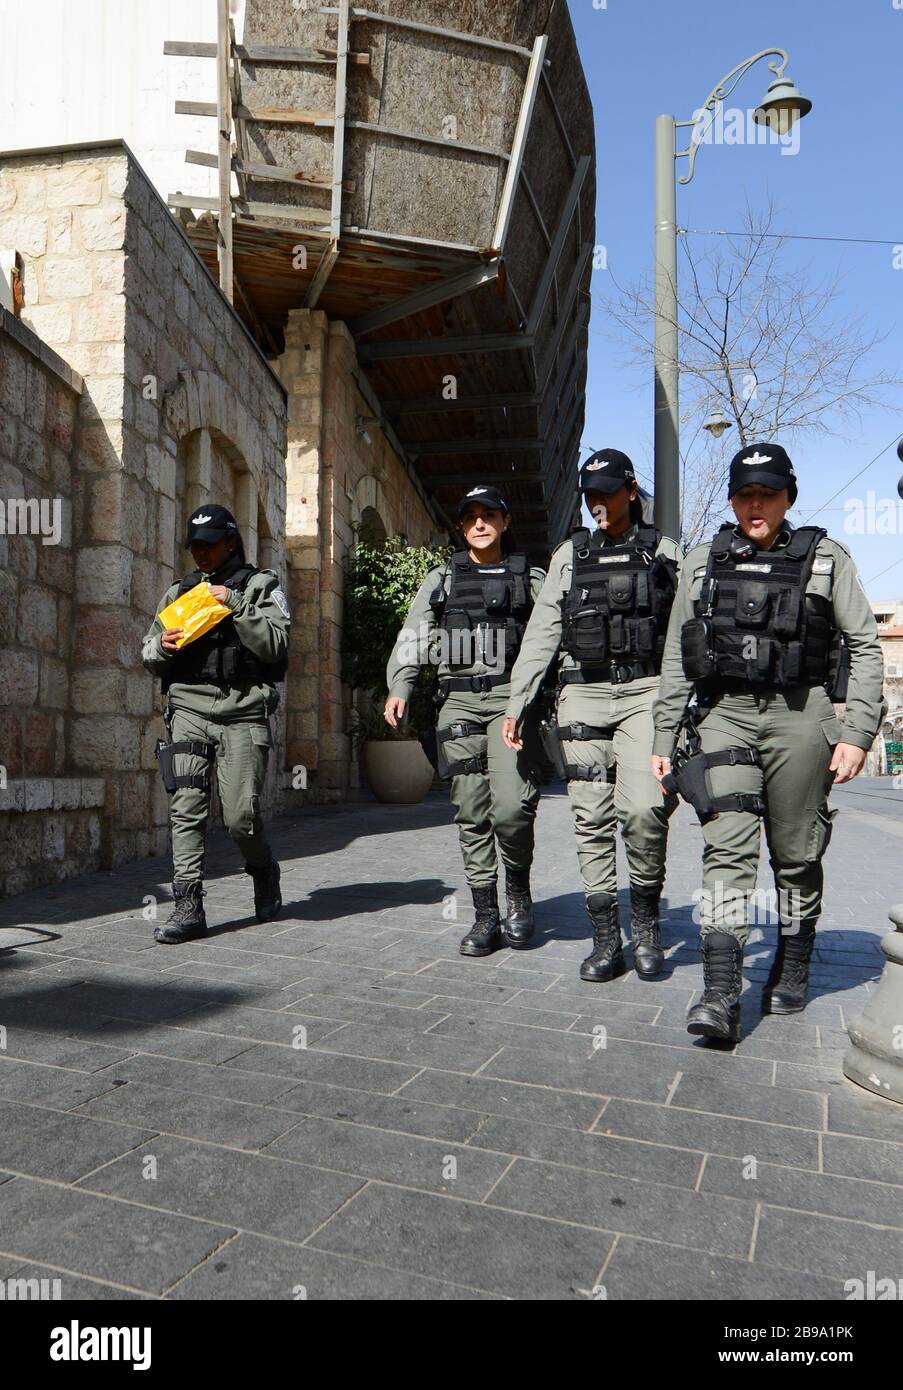 Israeli border police soldiers patrolling Jaffa street in Jerusalem. Stock Photo